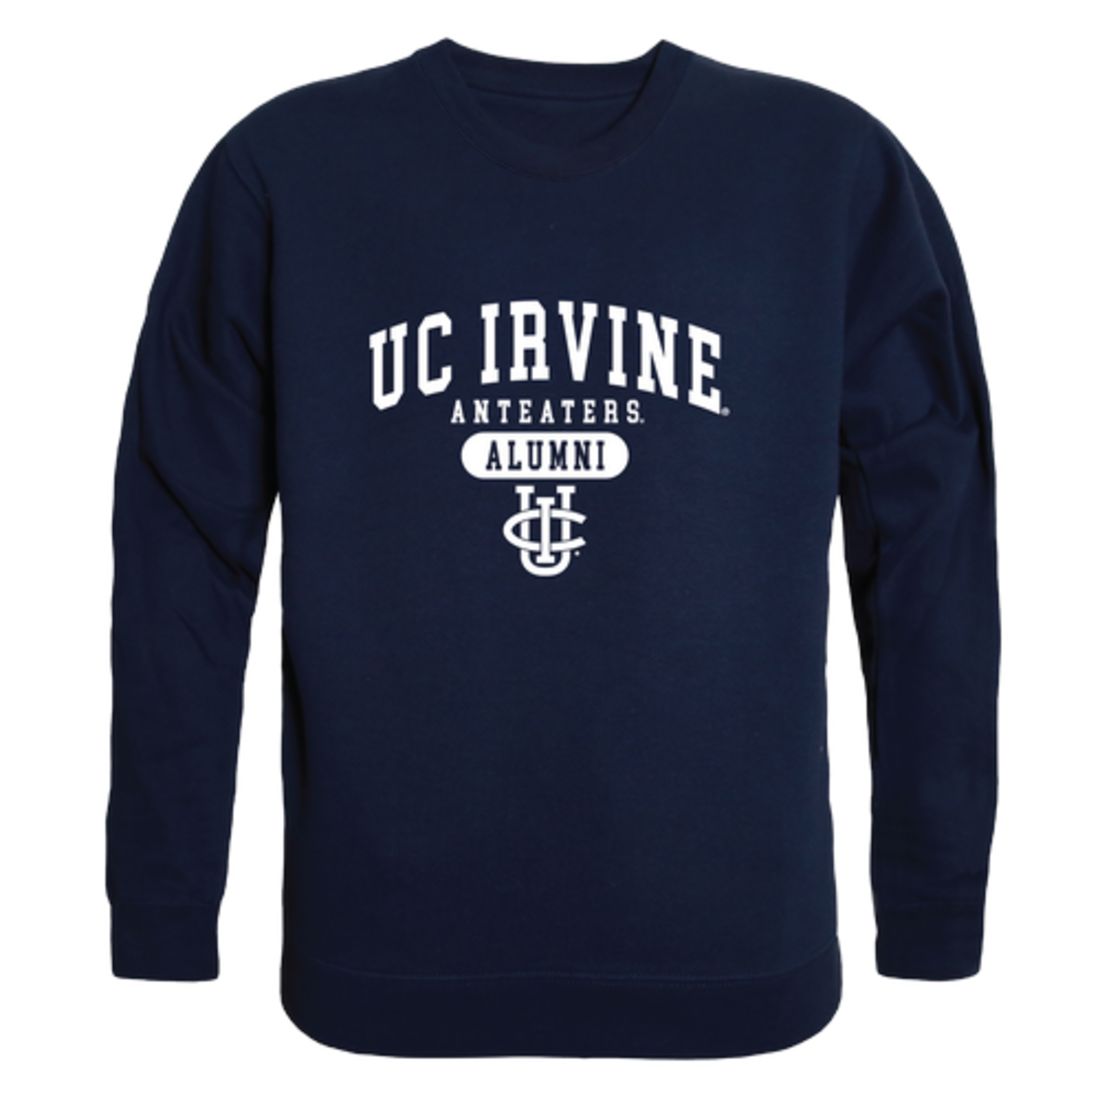 University of California UC Irvine Anteaters Alumni Fleece Crewneck Pullover Sweatshirt Heather Gray-Campus-Wardrobe